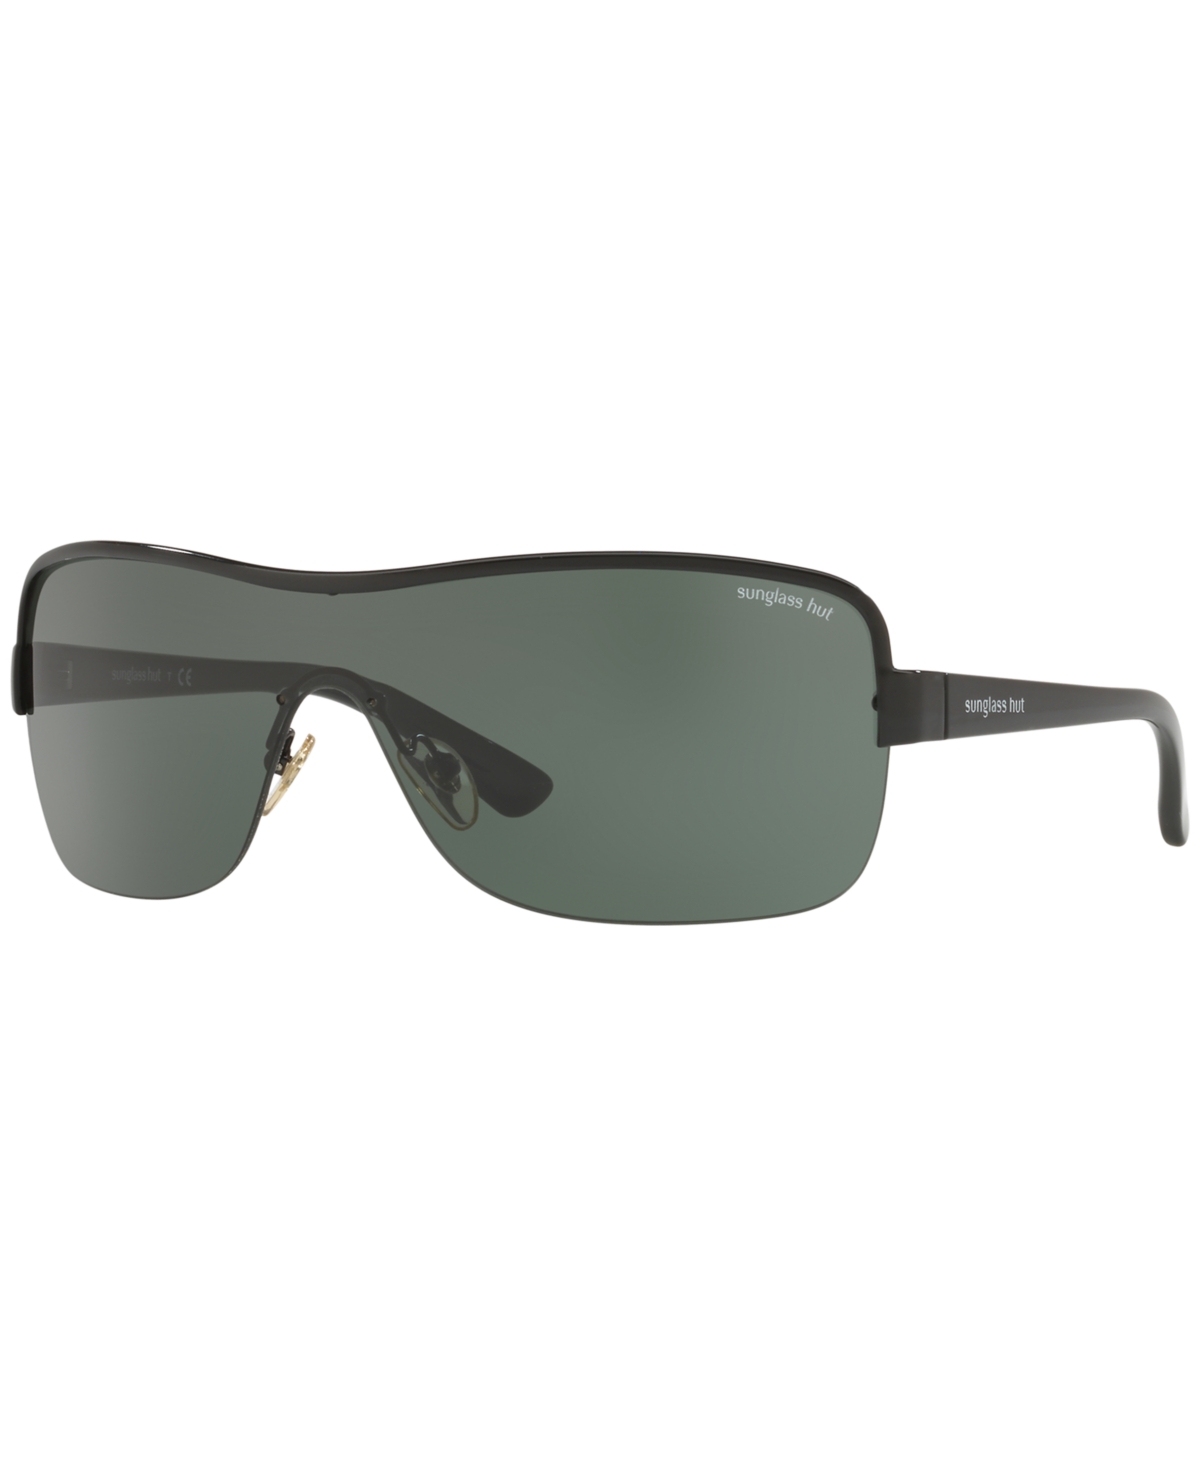 Sunglasses, HU1003 34 - BLACK/GREEN